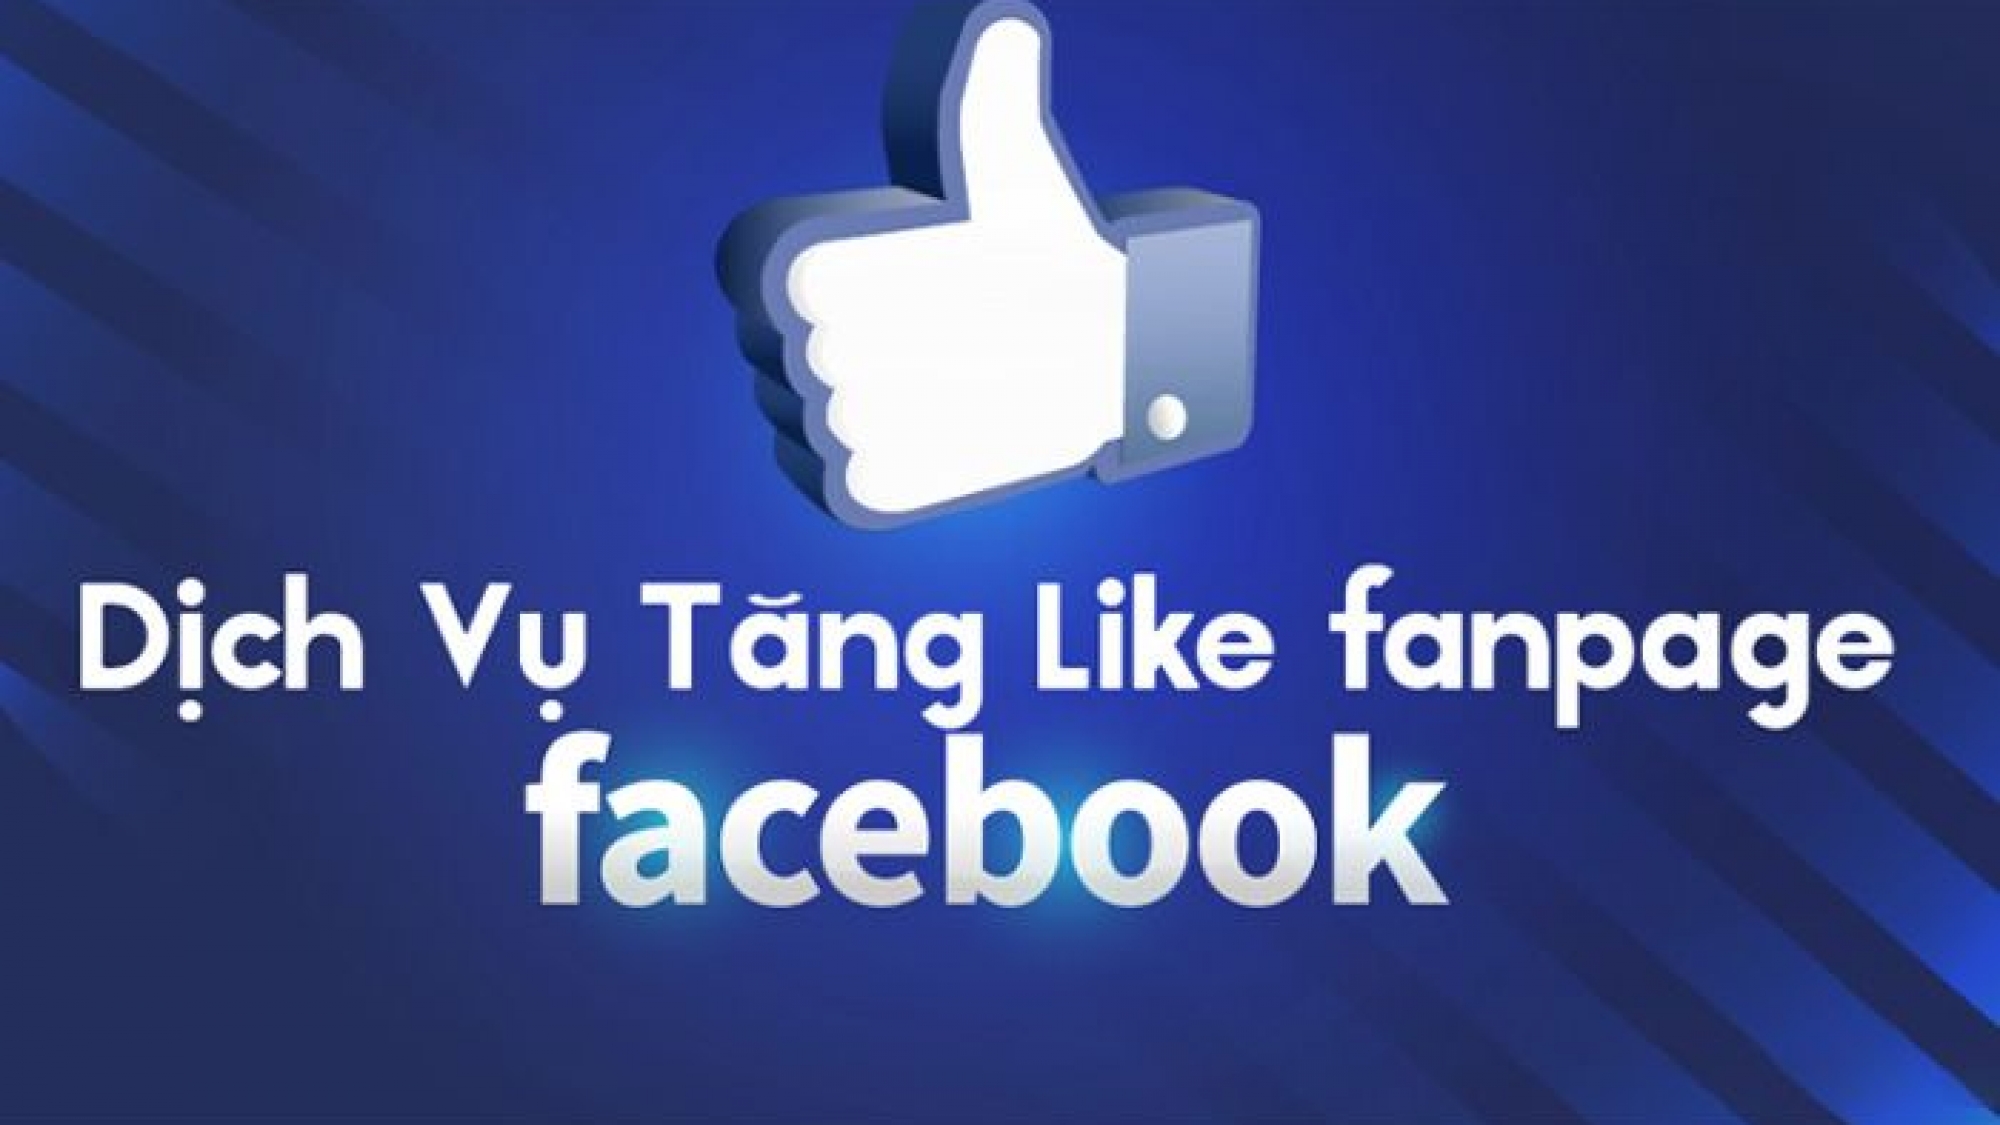 dich-vu-tang-like-fanpage-facebook-chat-luong-3